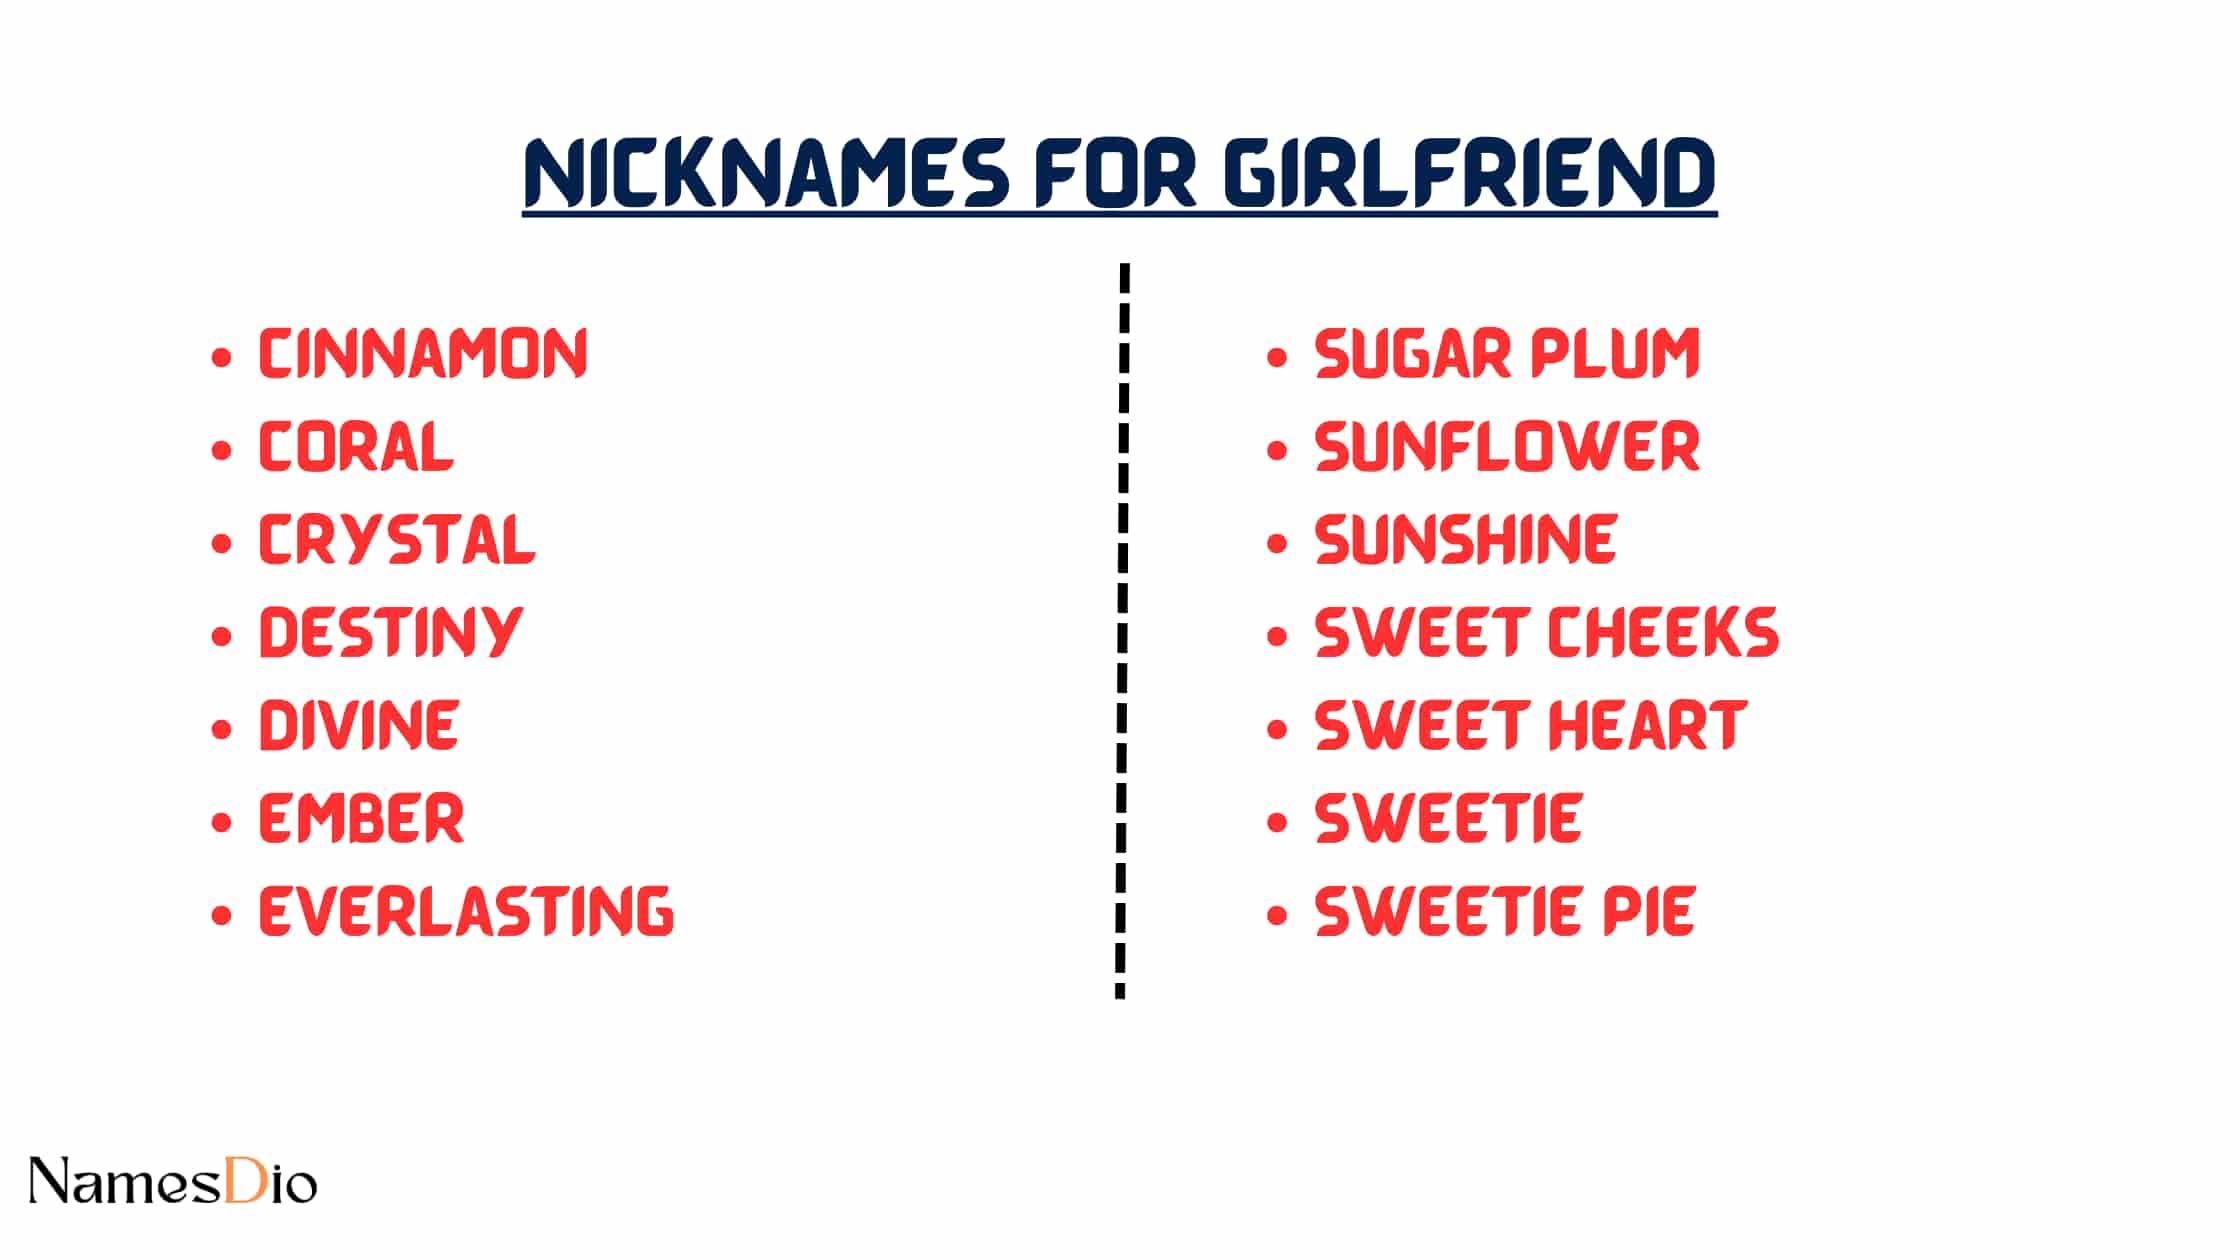 Nicknames-for-Girlfriend